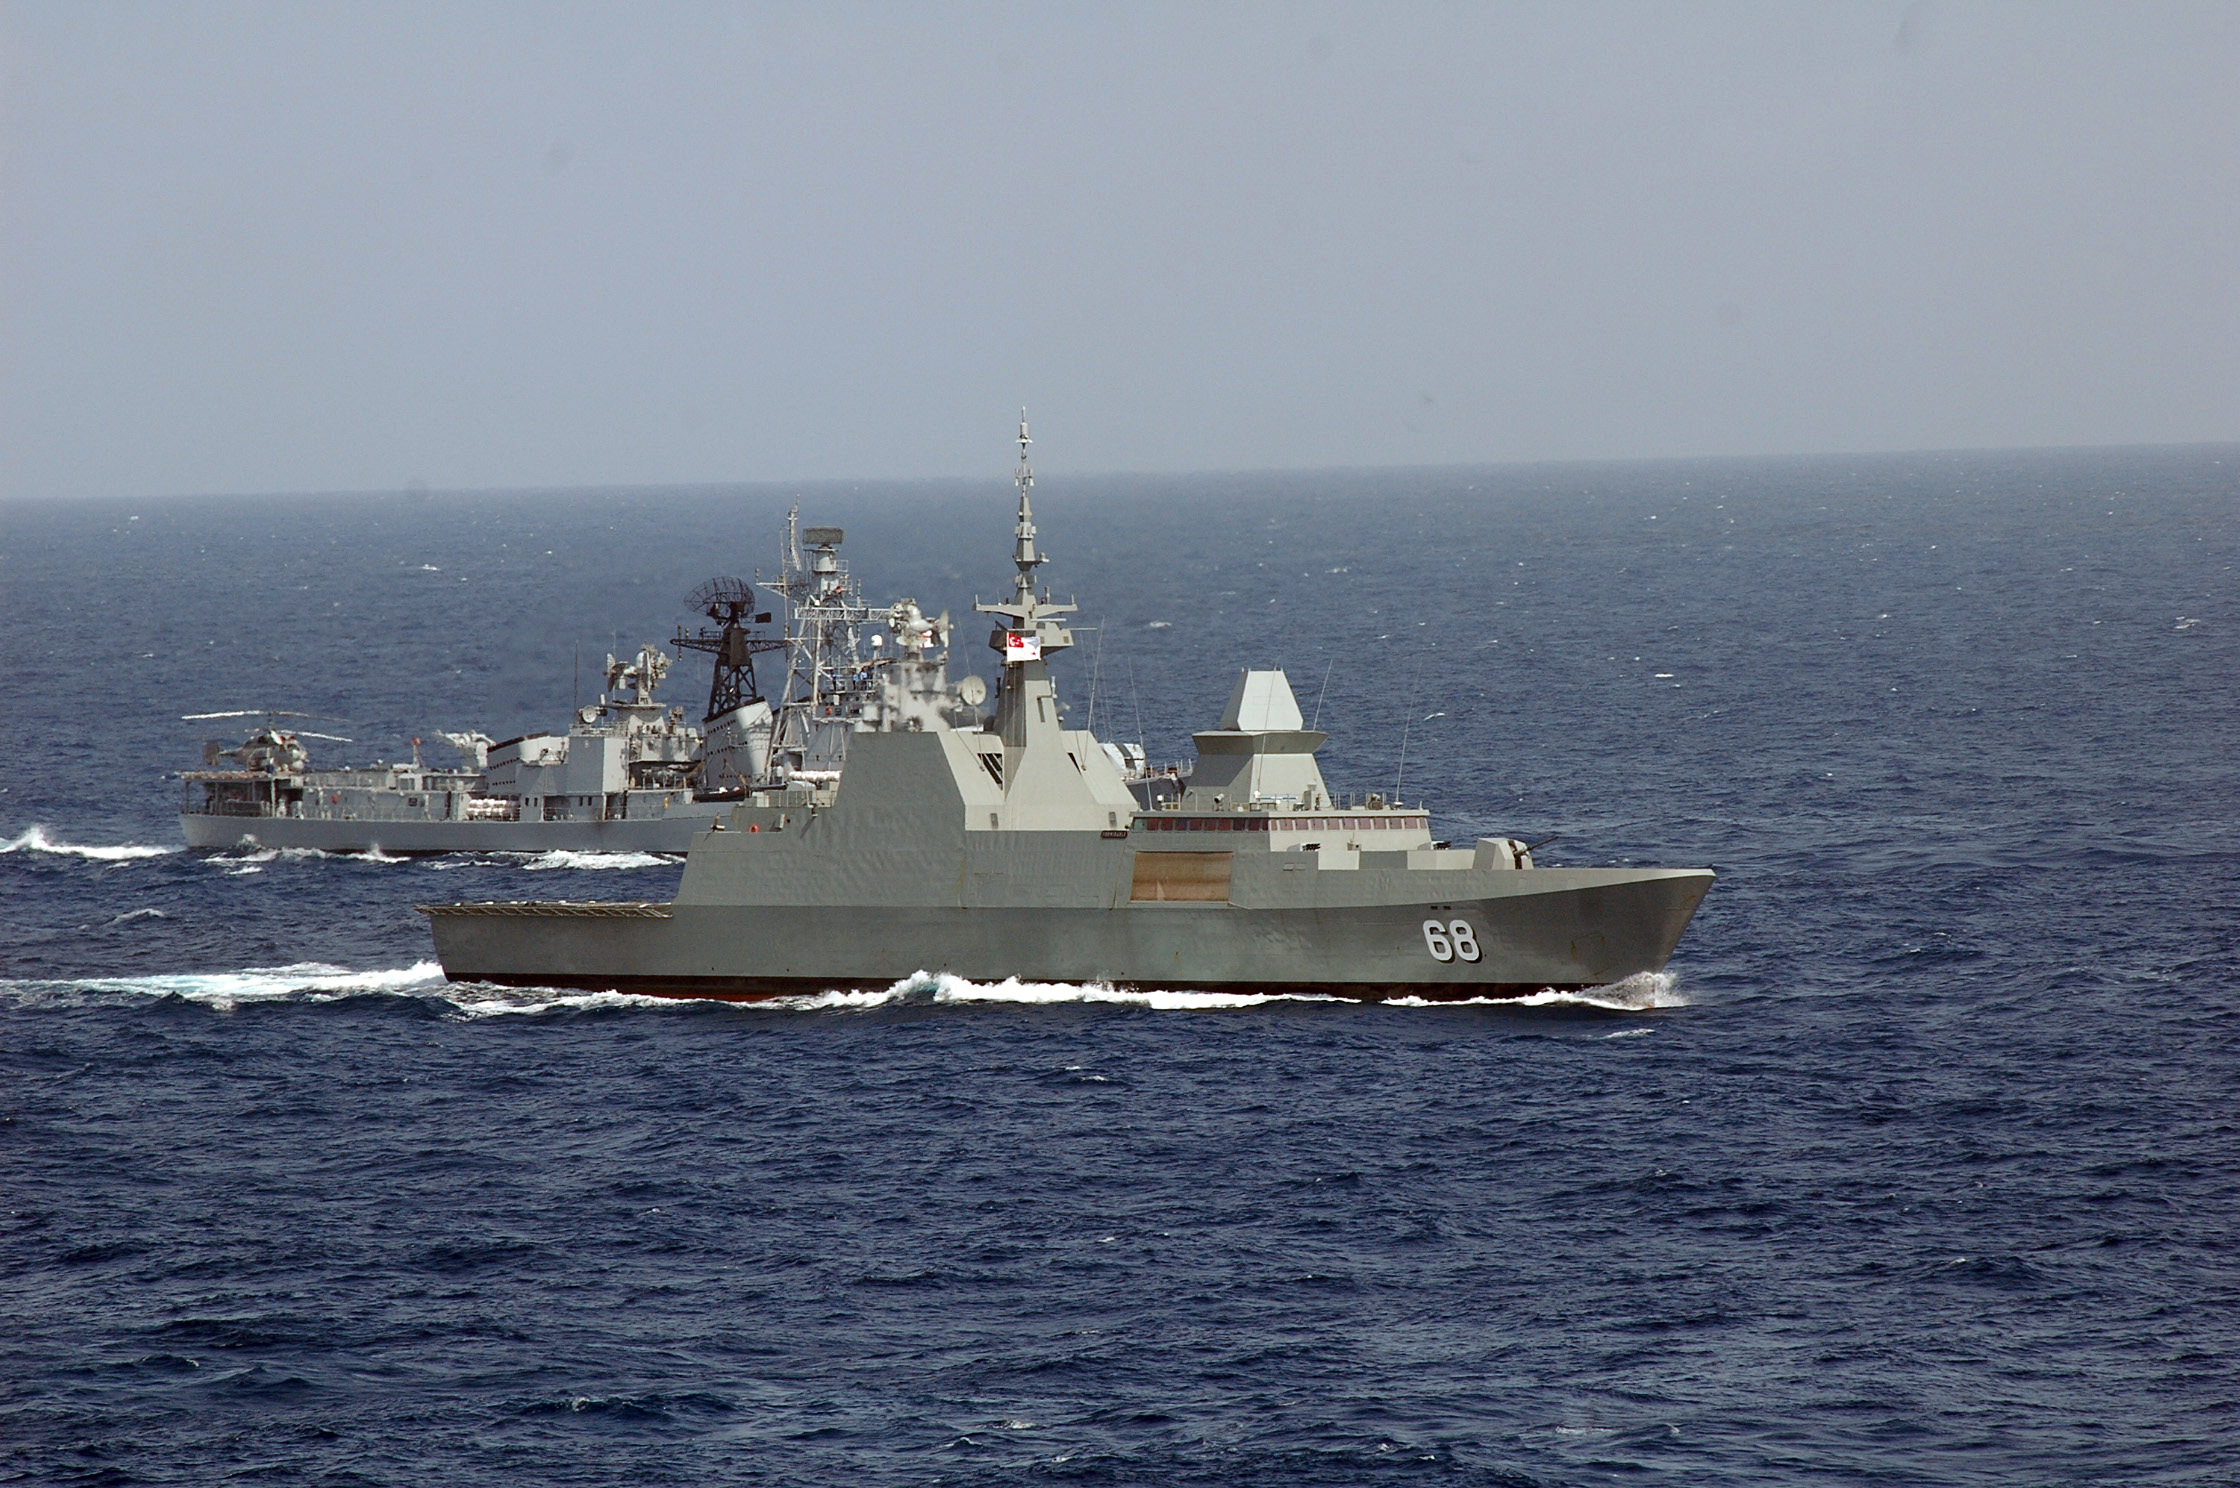 070905-N-1730J-129Singapore Navy frigate RSS Formidable.jpg